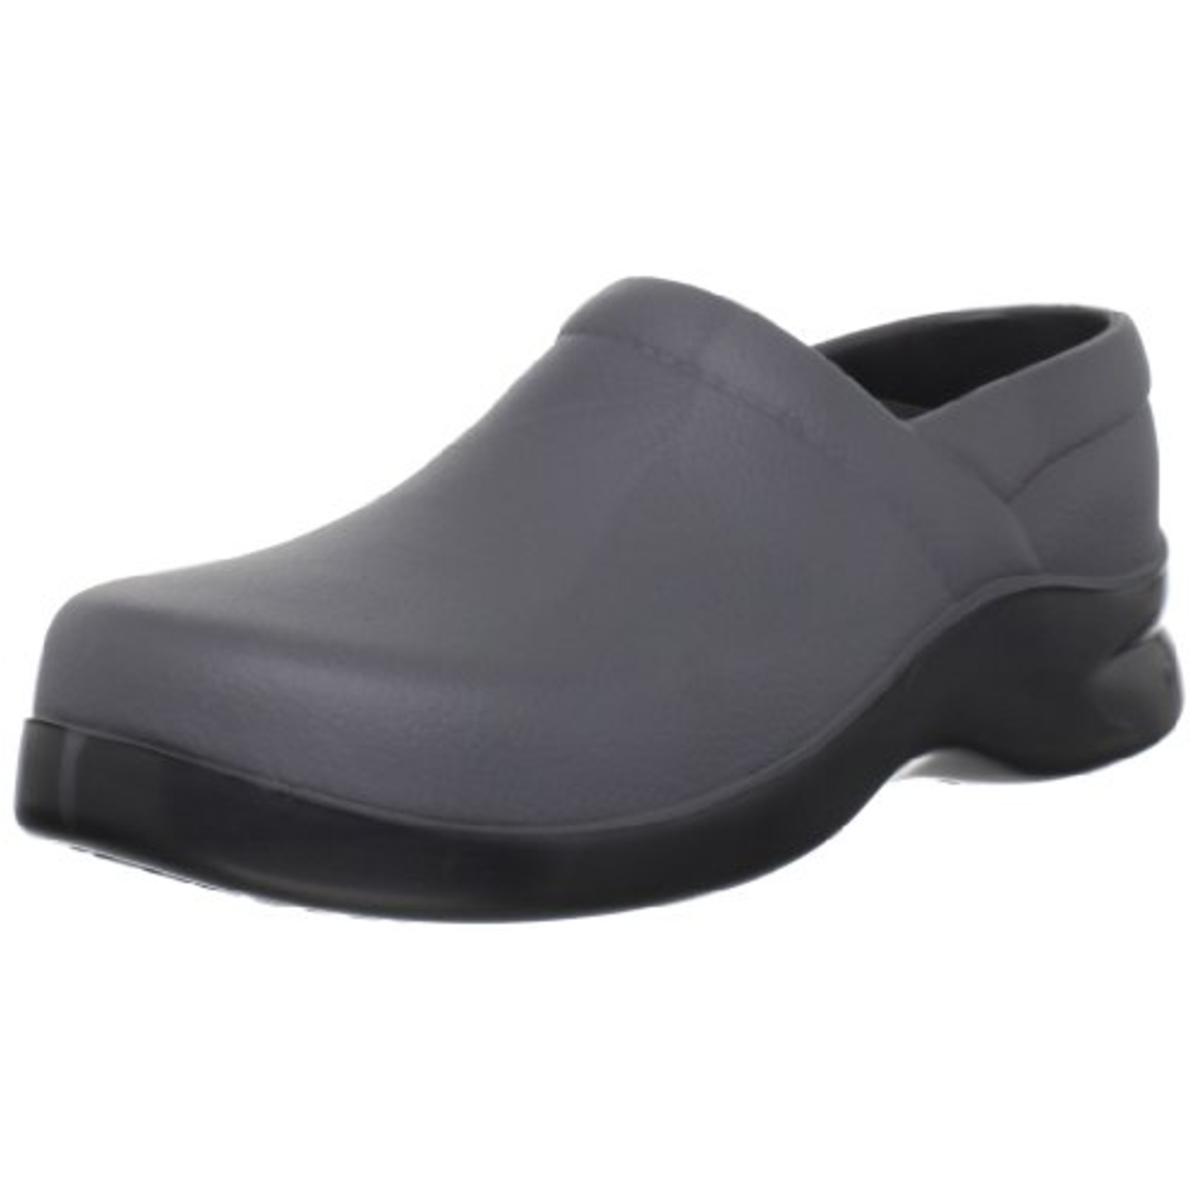 Klogs 6738 Womens Boca Textured Slip Resistant Comfort Clogs Shoes BHFO ...